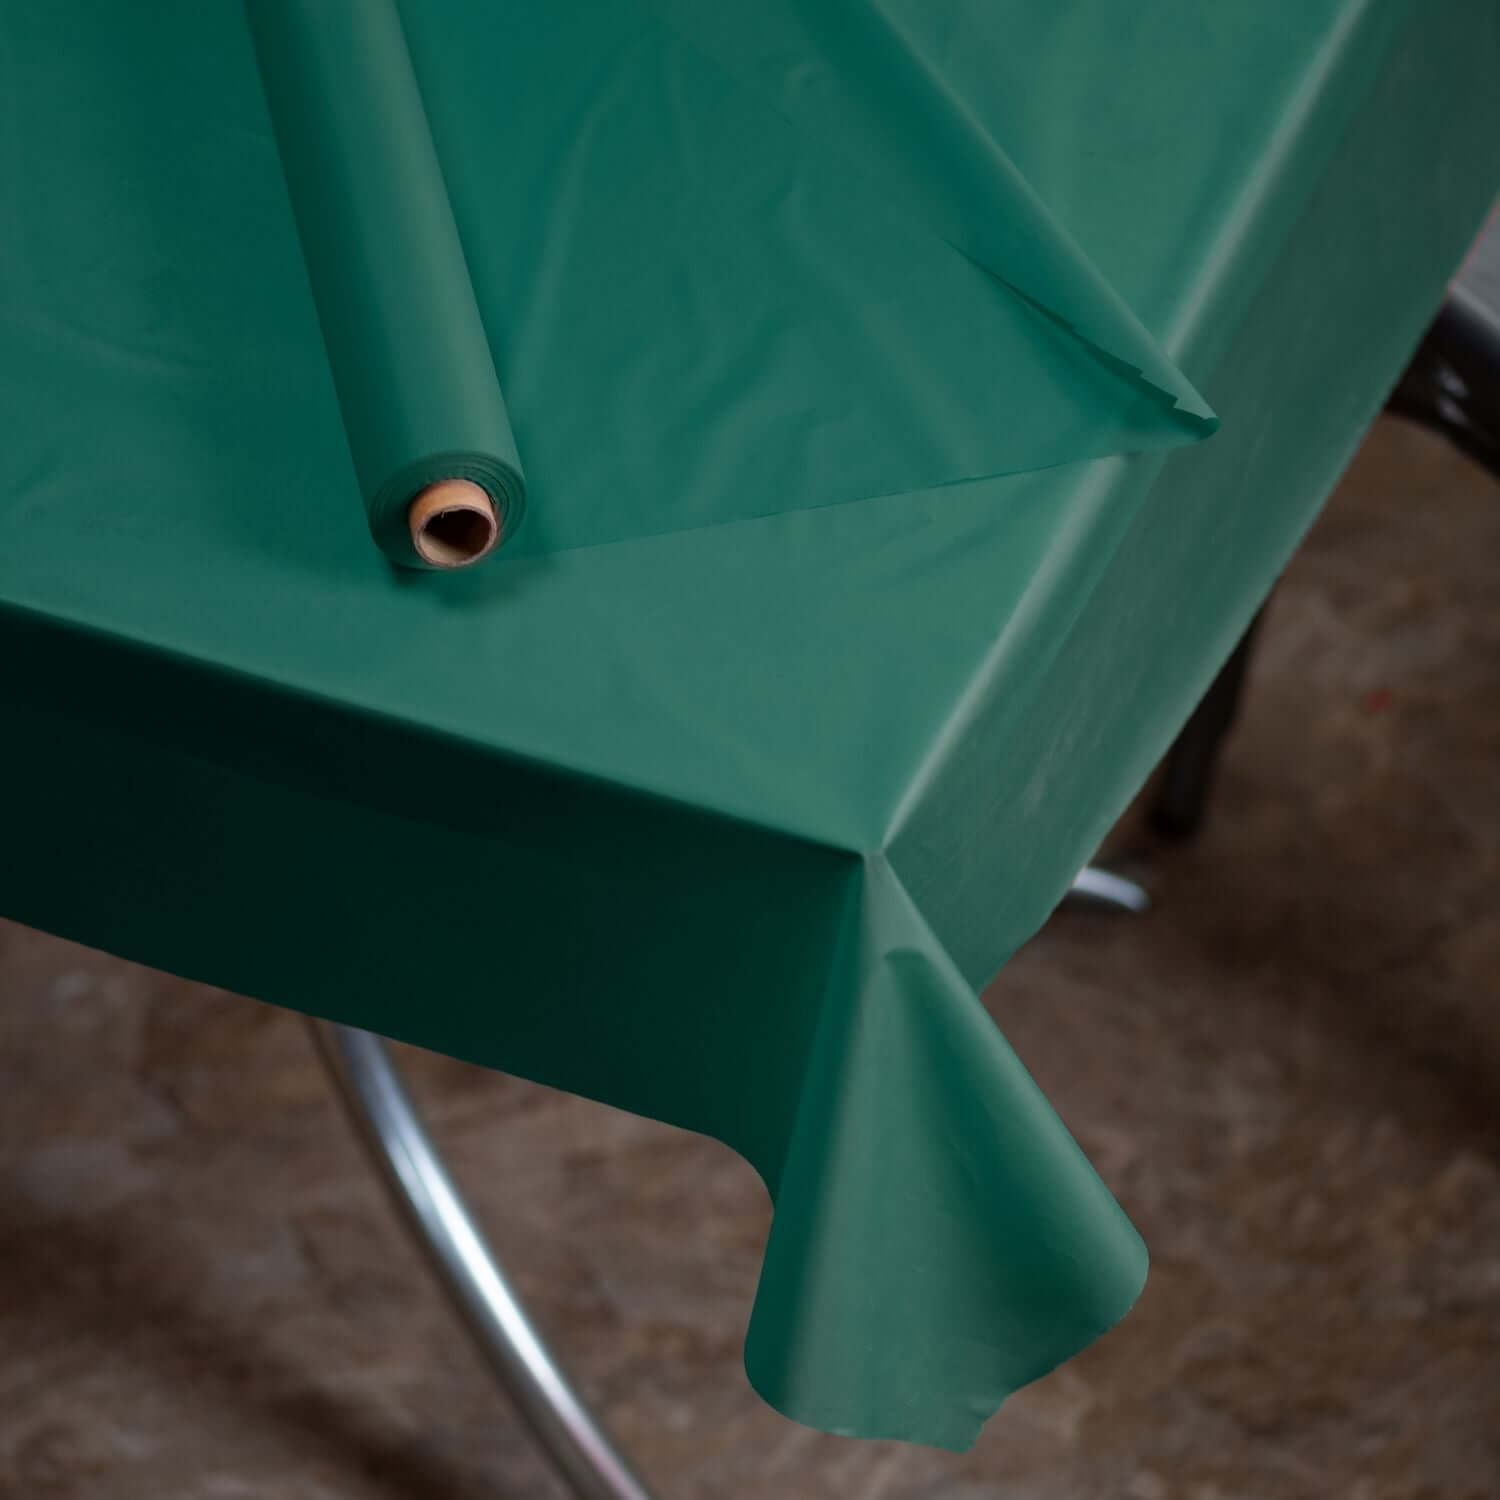 40 In. X 100 Ft. Premium Dark Green Plastic Table Roll | 6 Pack - Yom Tov Settings